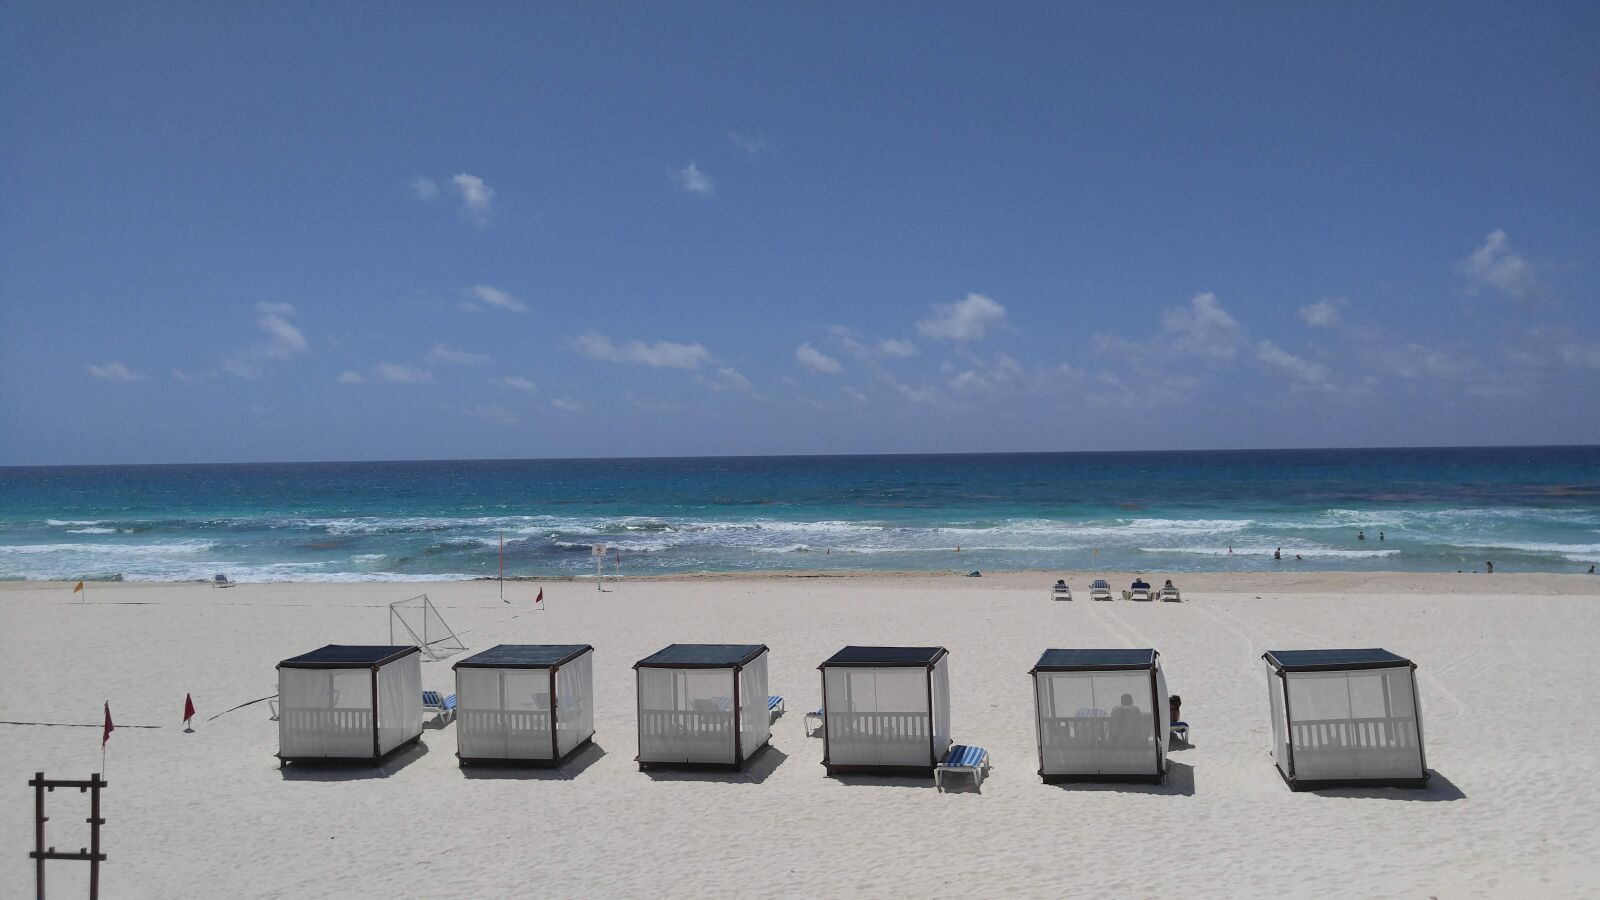 LG V10 sample photo. Cancun, mexico, beach photography